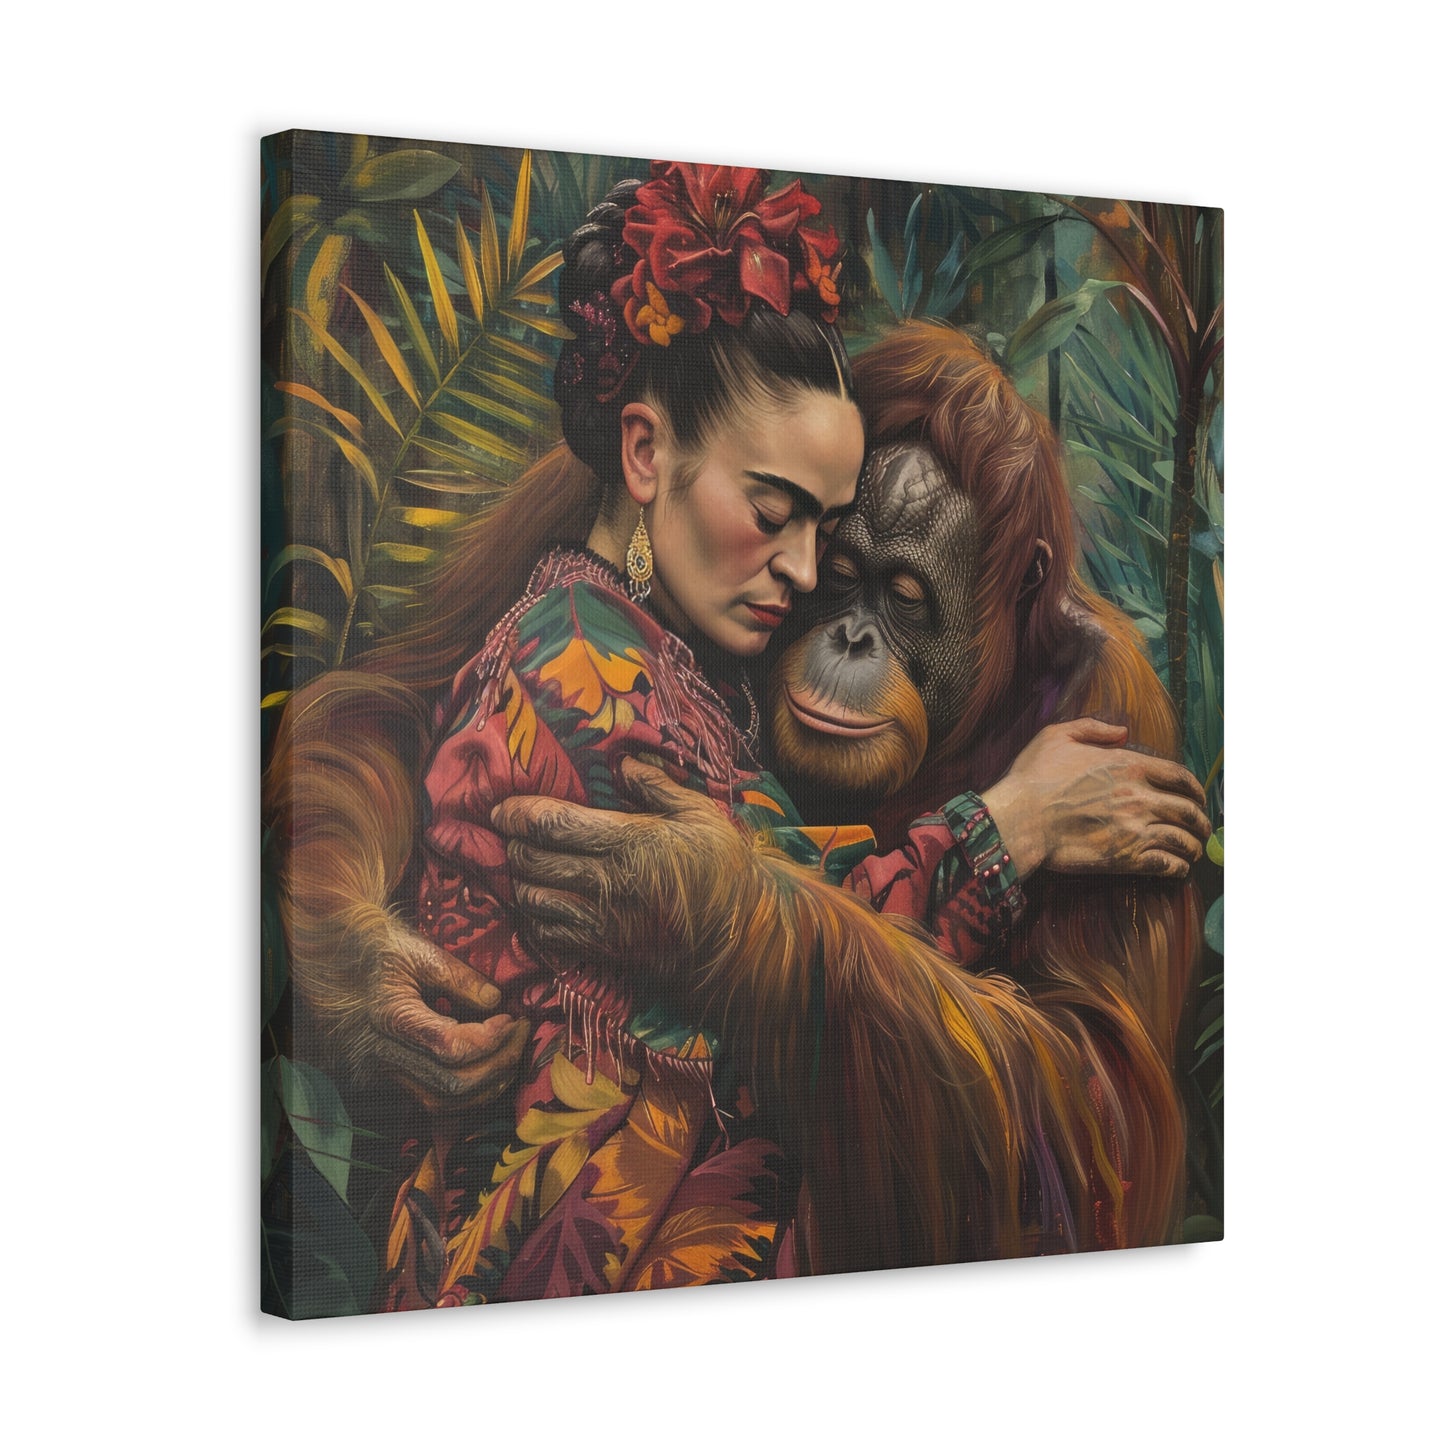 A Printify David Miller inspired artwork depicting a woman embracing an orangutan amidst a lush jungle backdrop.